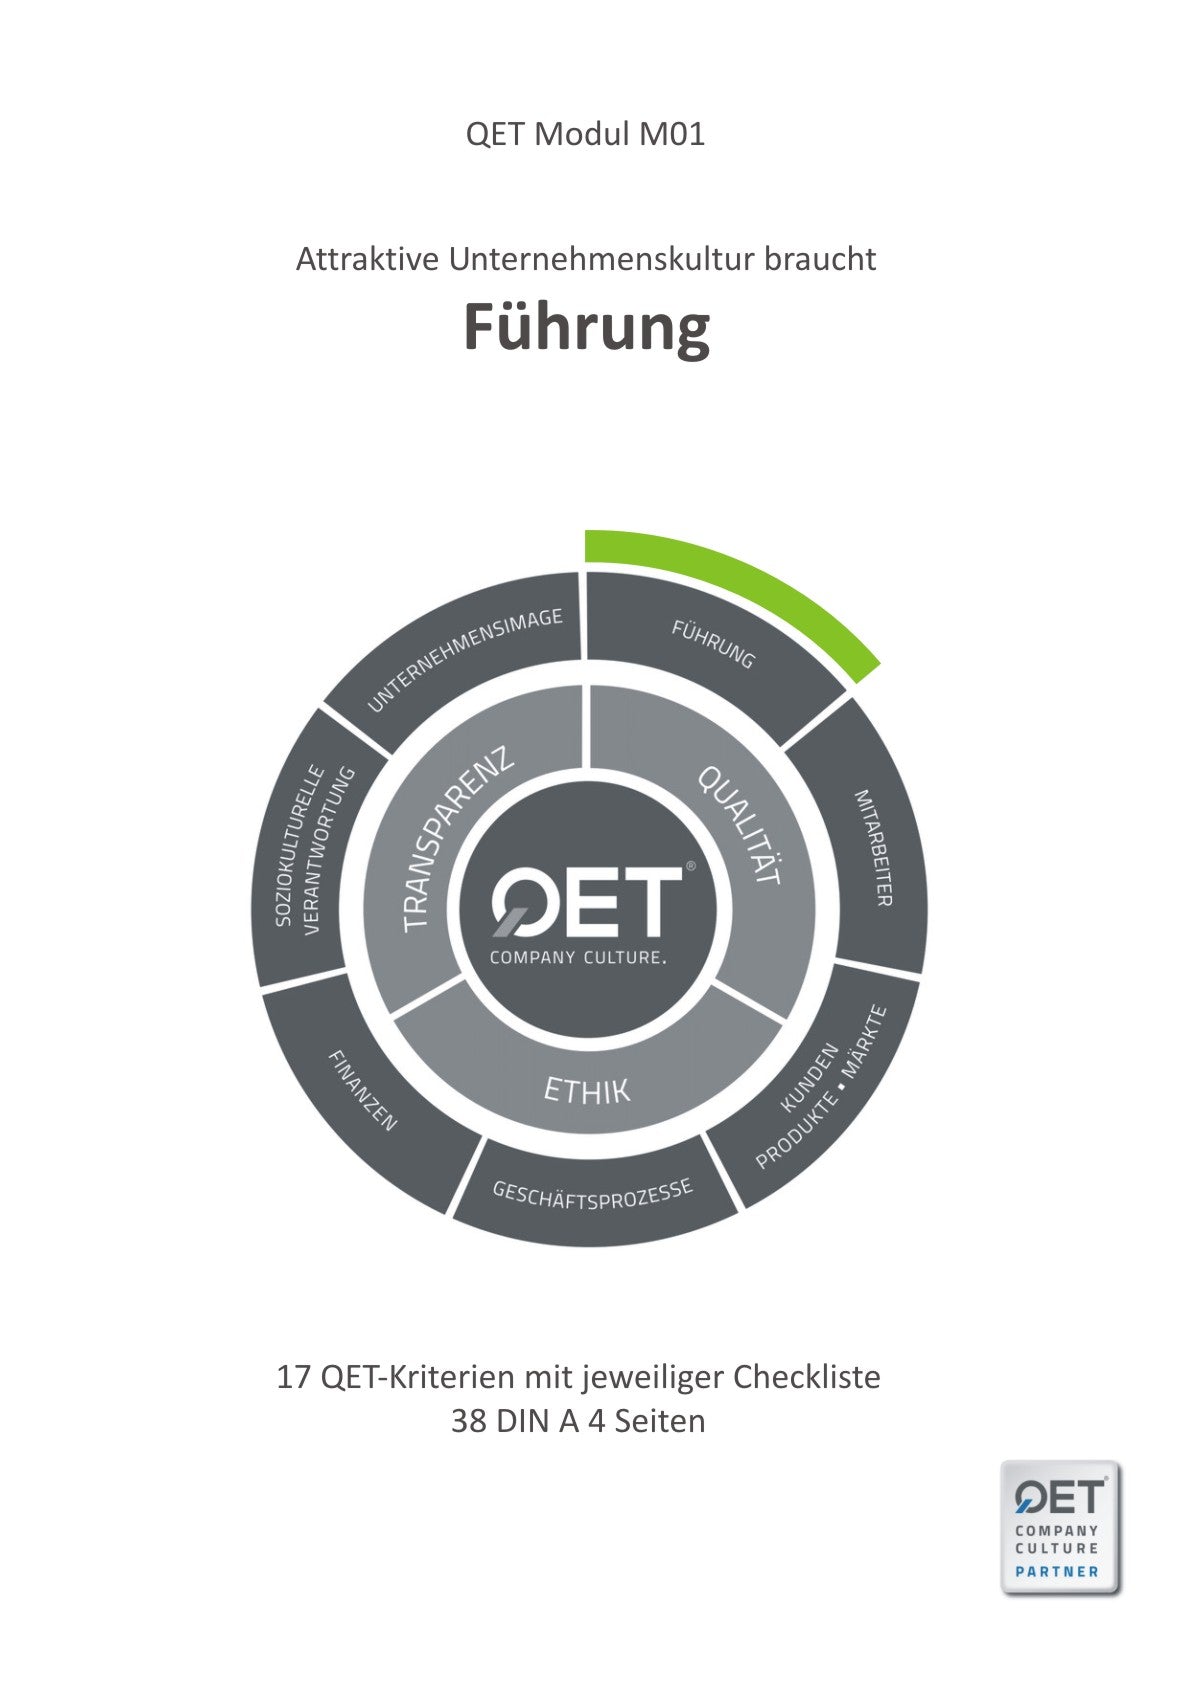 M01 Attraktive Unternehmenskultur - Führung - QET Managementsystem